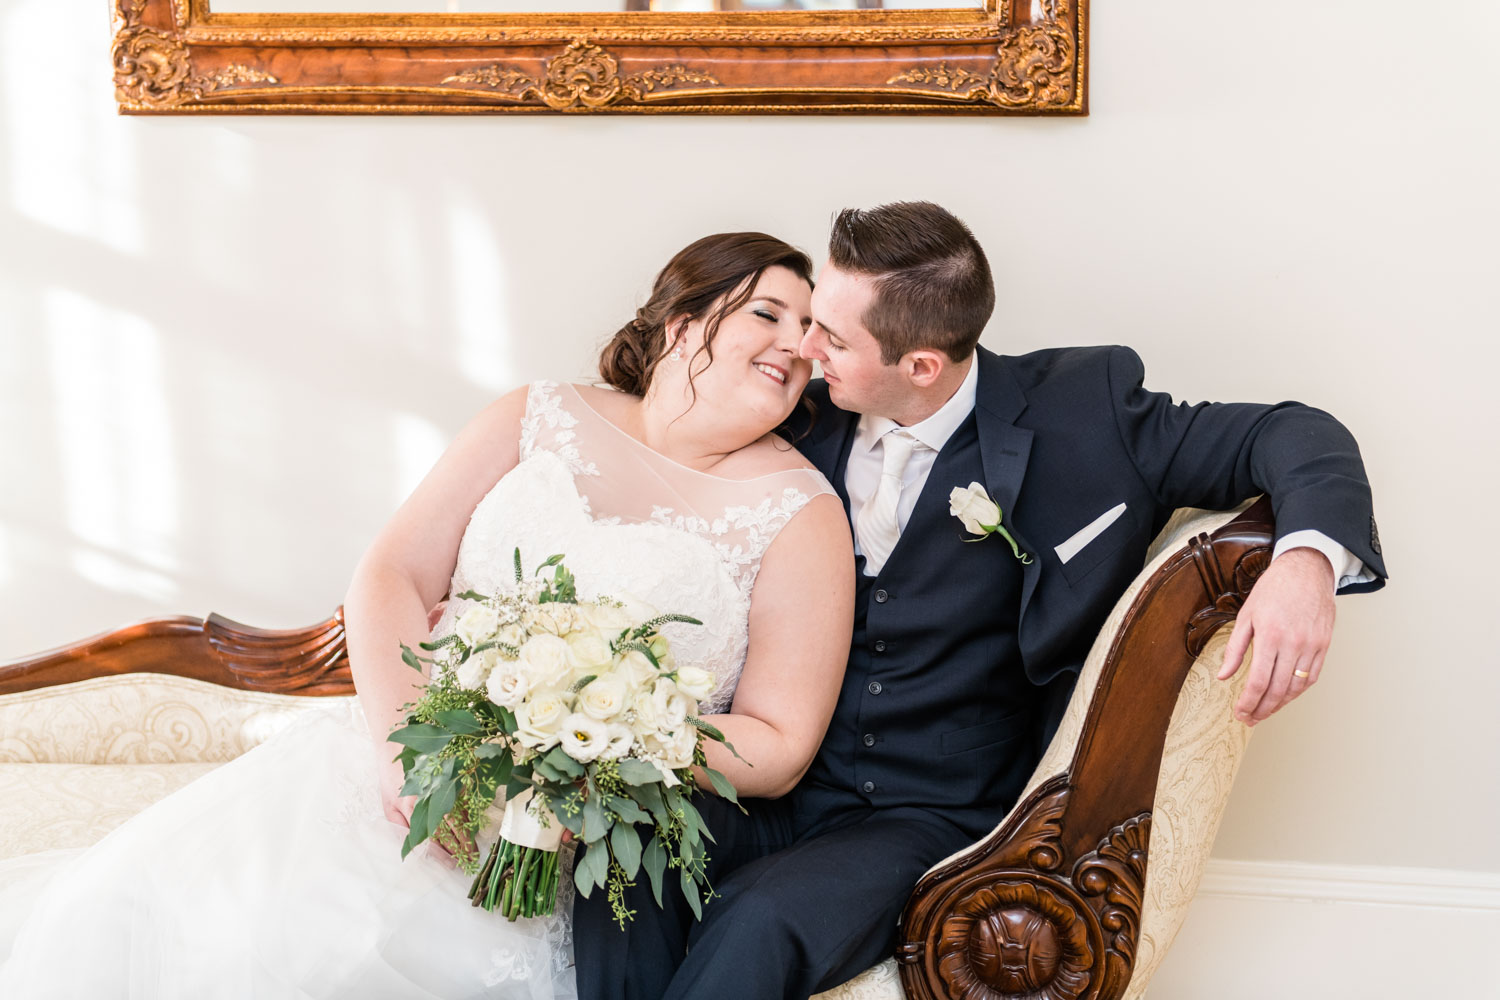 Katelyn + Joe | St. Patrick's Day Topsfield Commons Spring Wedding | Boston and New England Wedding Photography | Lorna Stell Photo